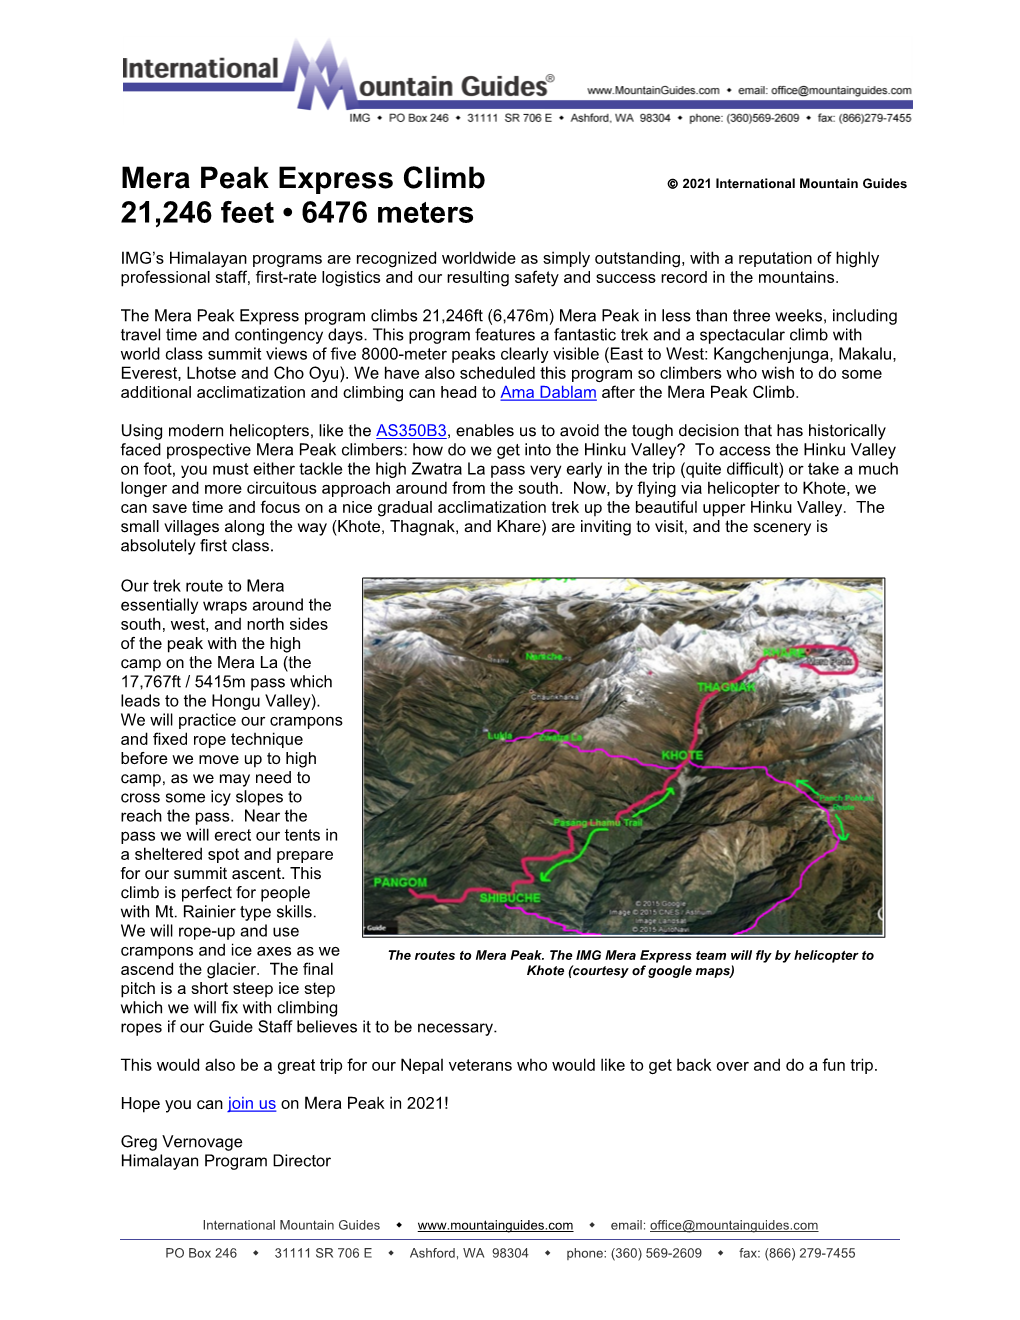 Mera Peak Trip Information